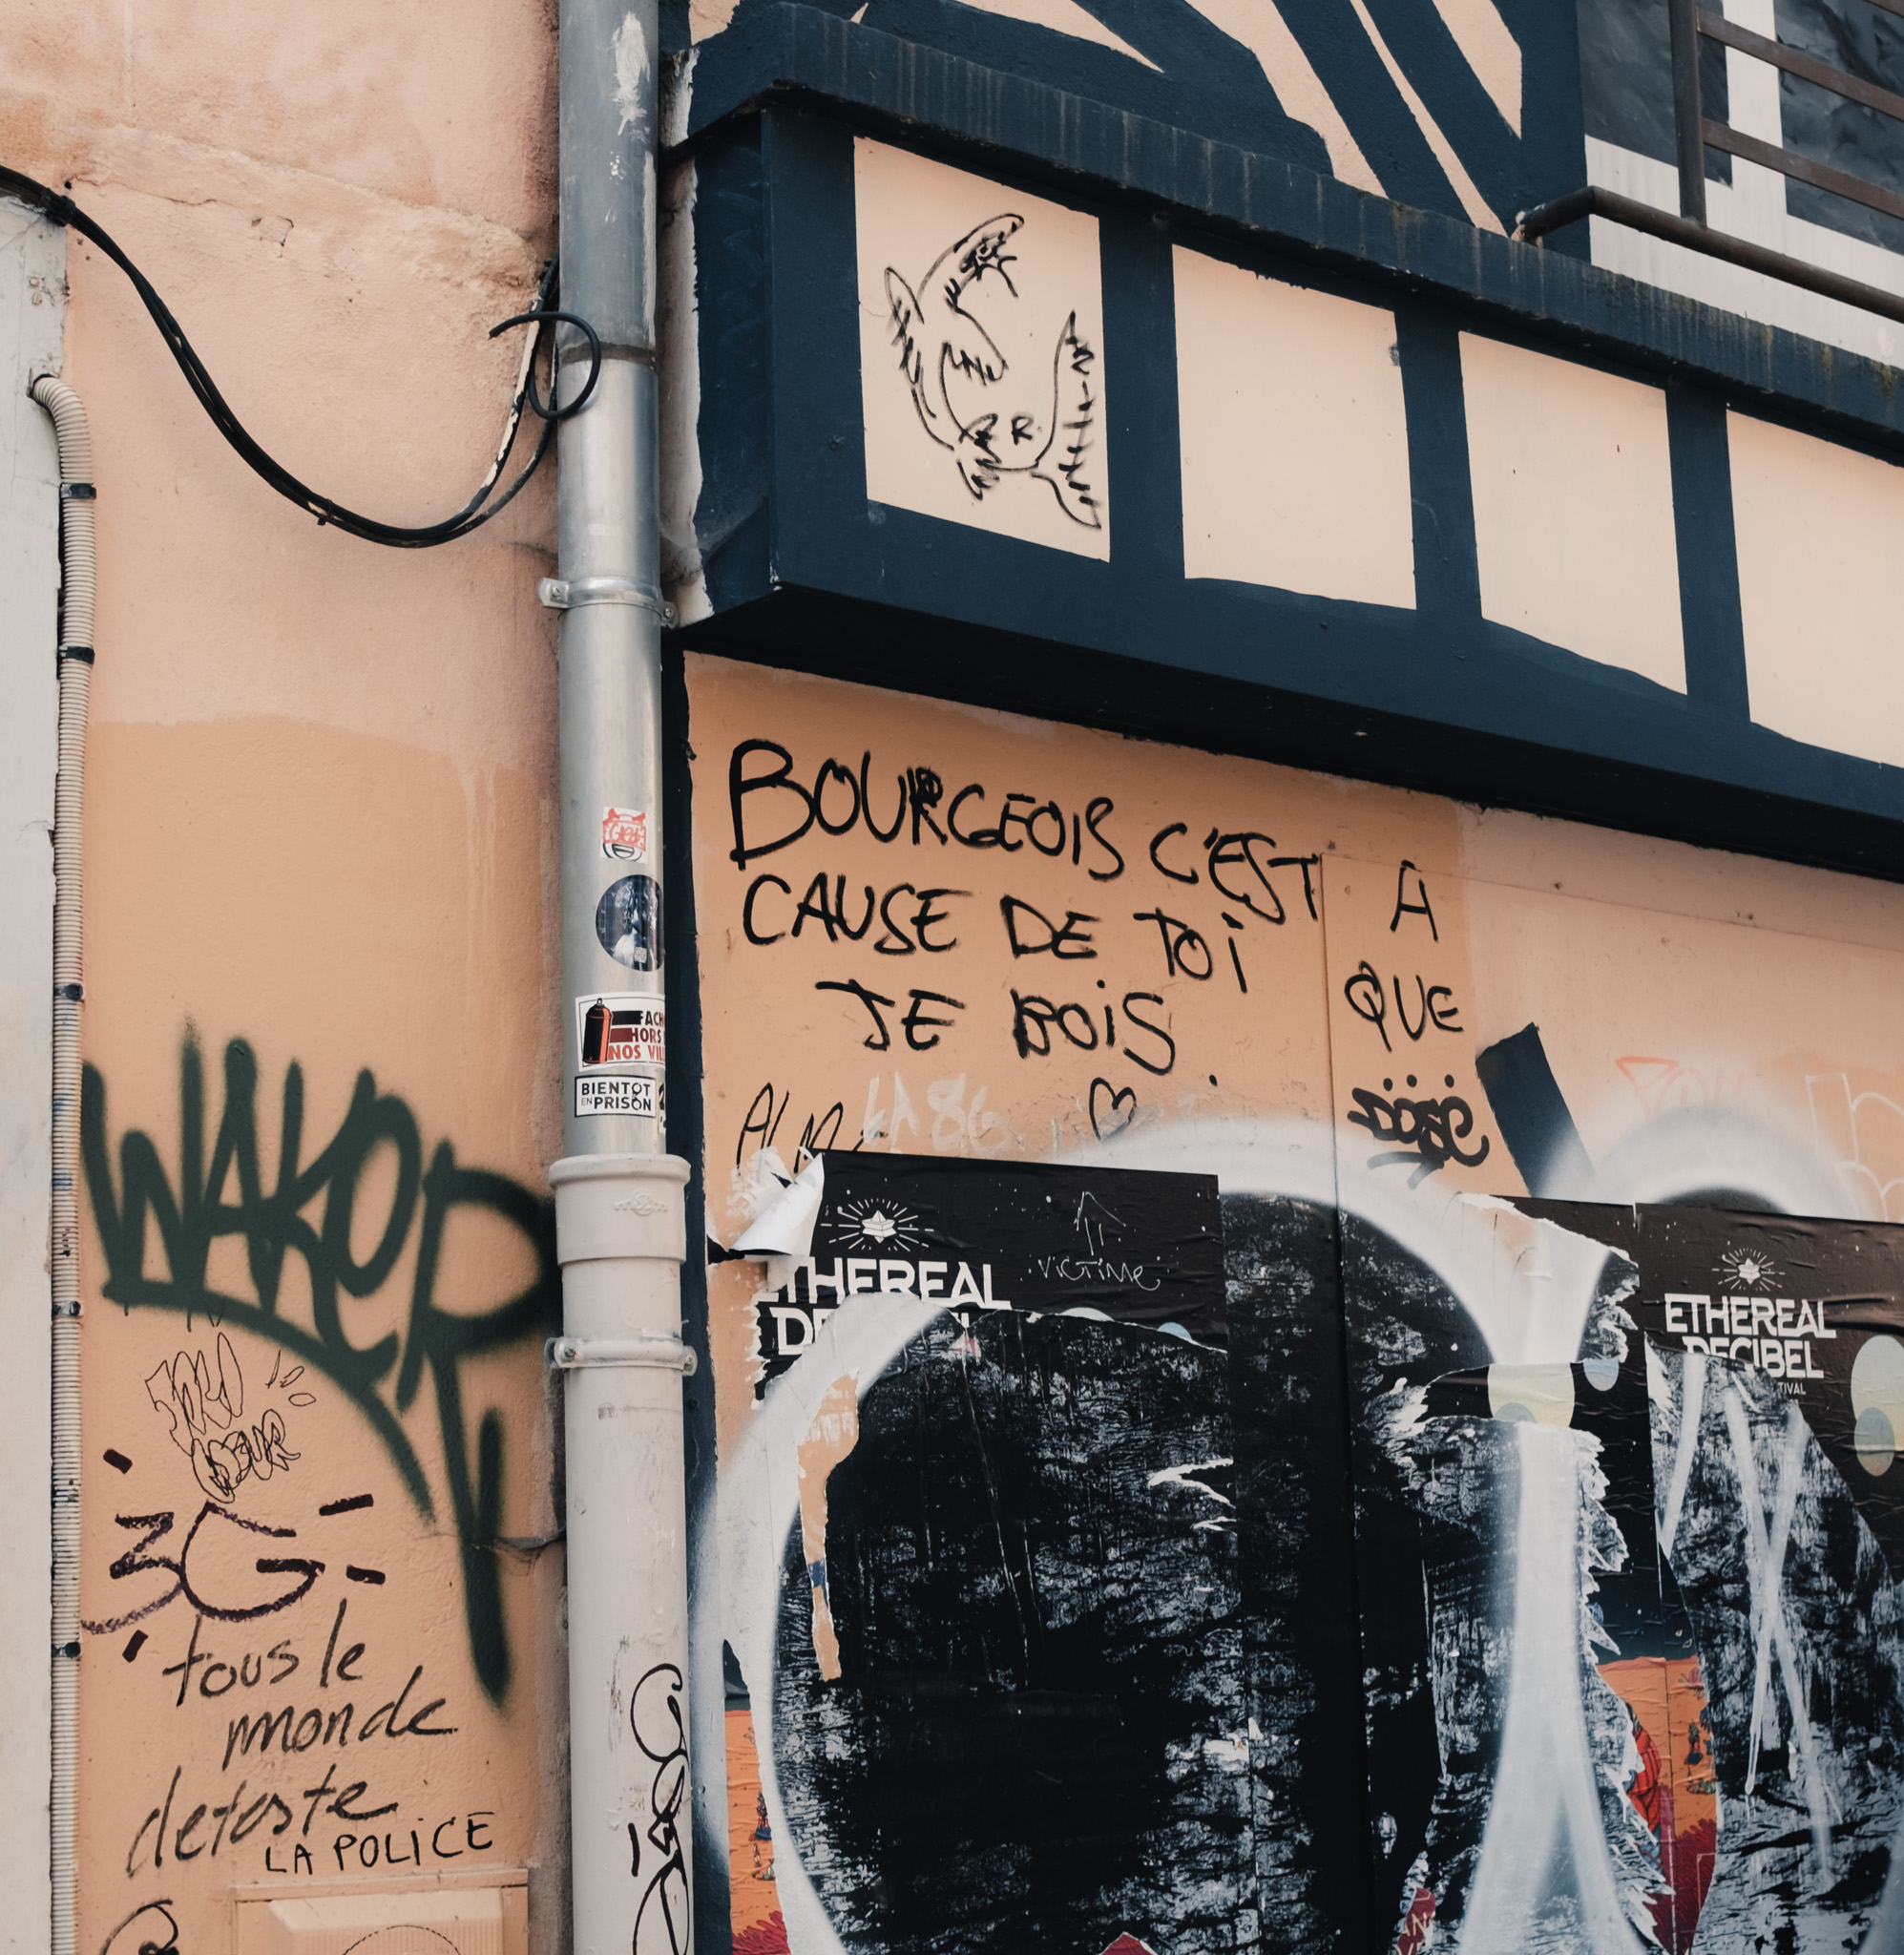 Photo of graffiti on a plaster wall, including a scrawled “Bourgeois c’est à cause de toi que je bois”